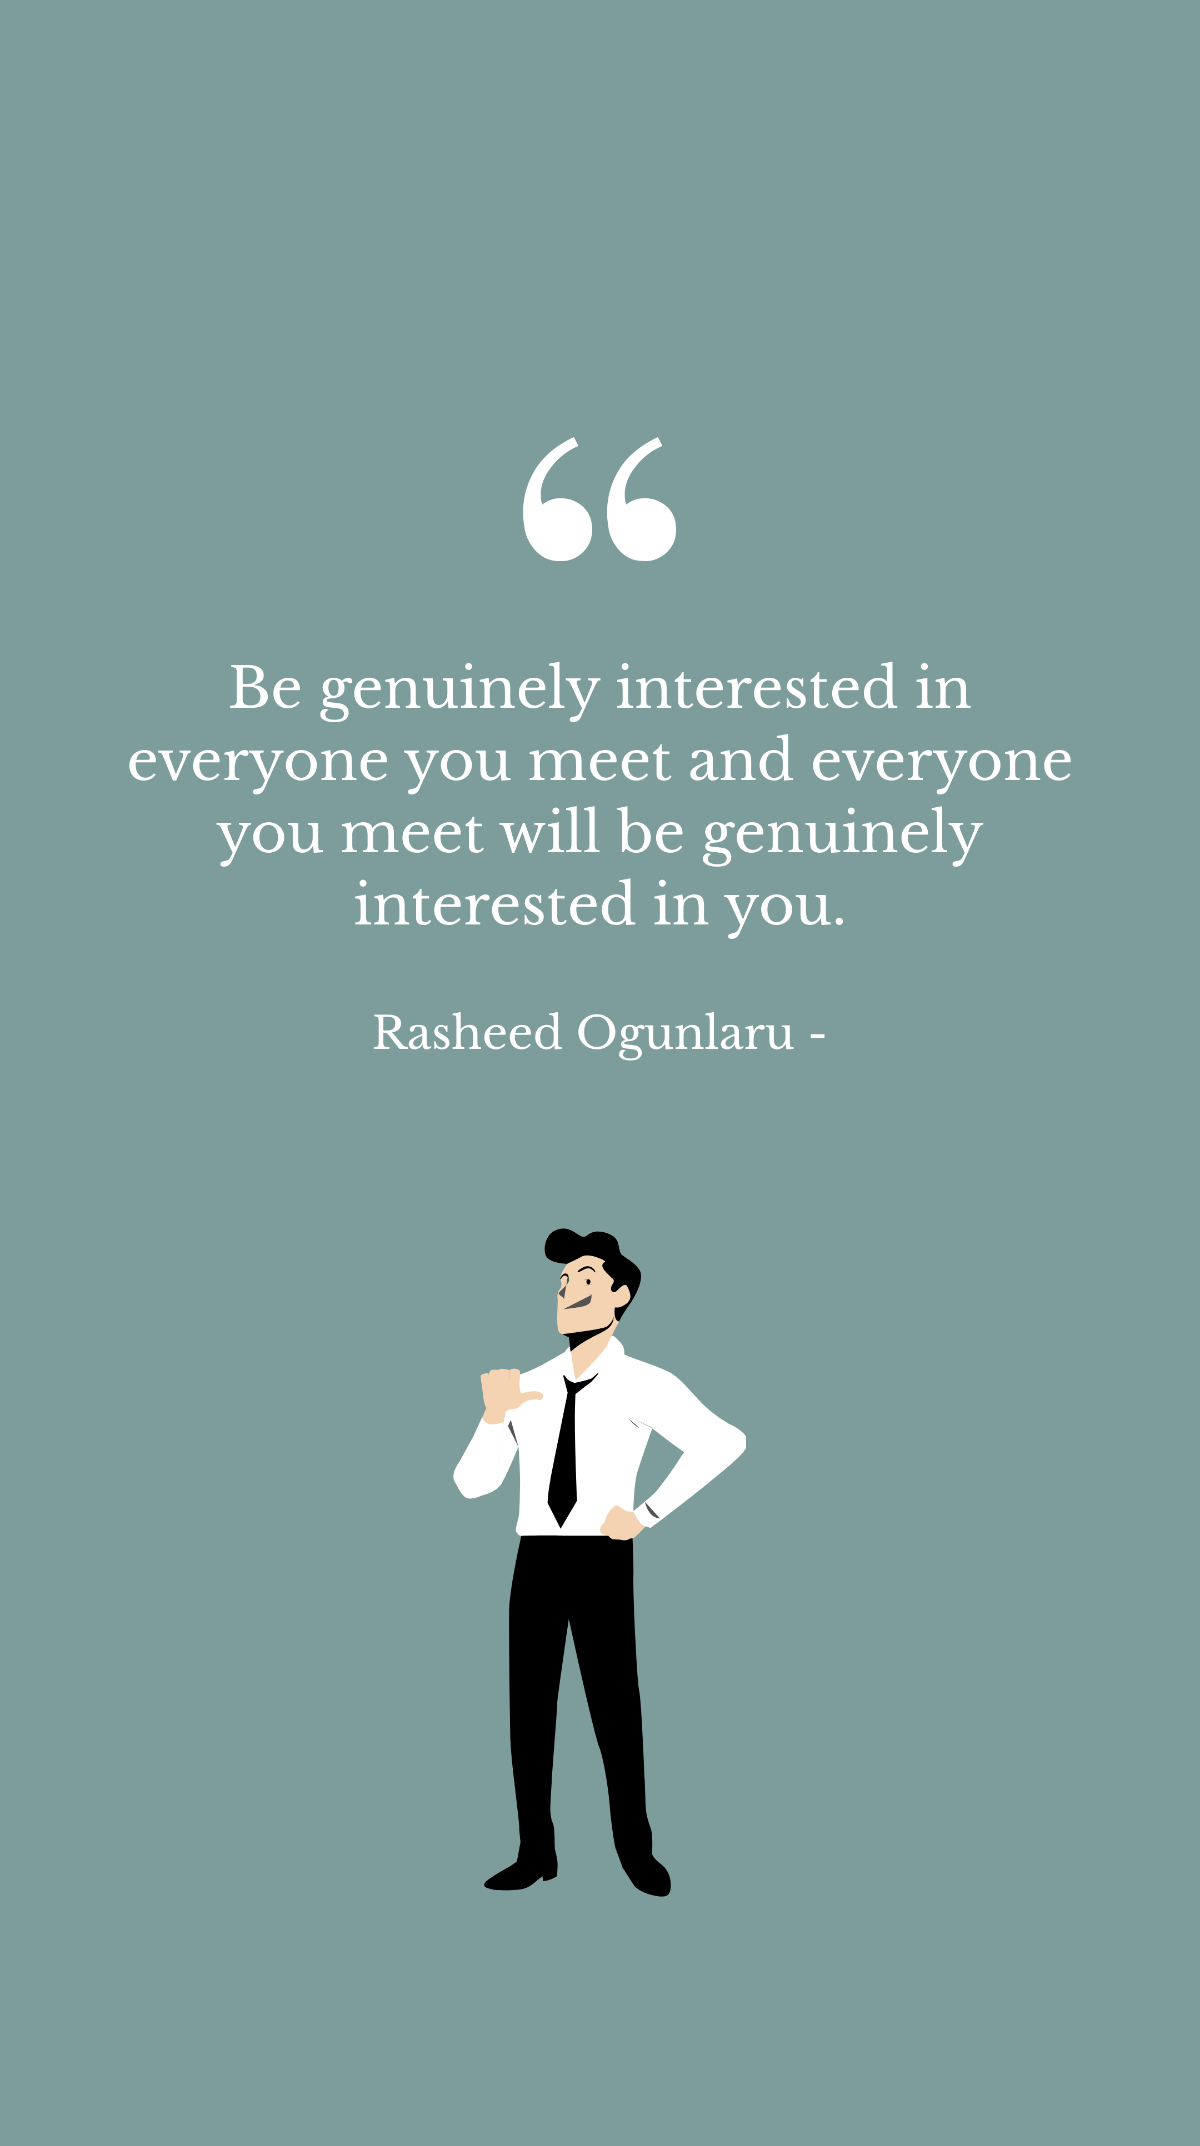 Rasheed Ogunlaru - Be genuinely interested in everyone you meet and everyone you meet will be genuinely interested in you. Template